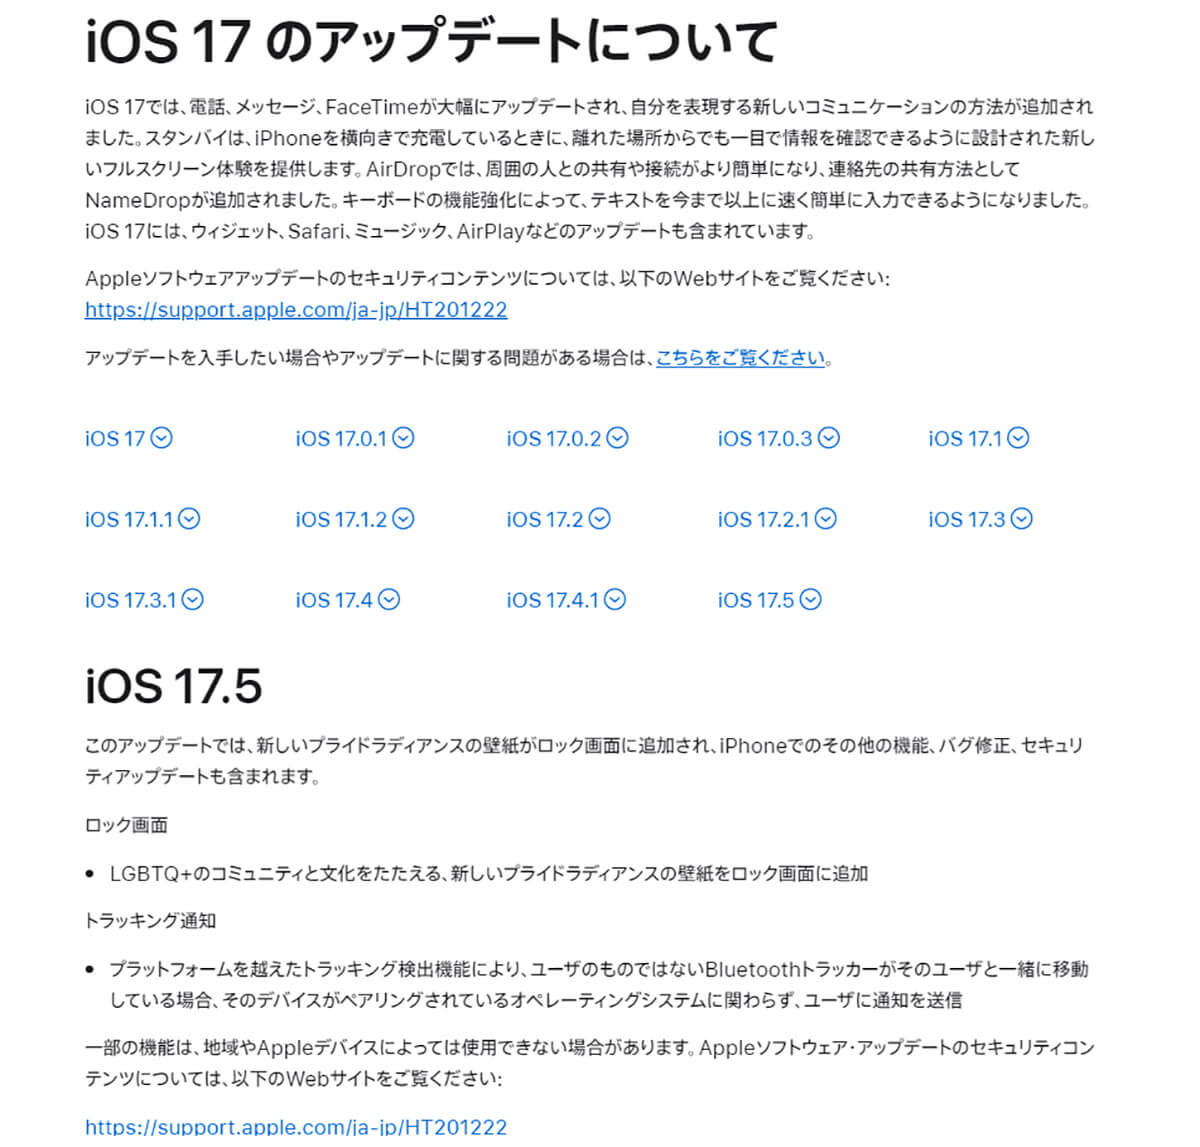 「iOS 17.5」では新しい壁紙や不正なBluetoothトラッカー対策が追加された！1